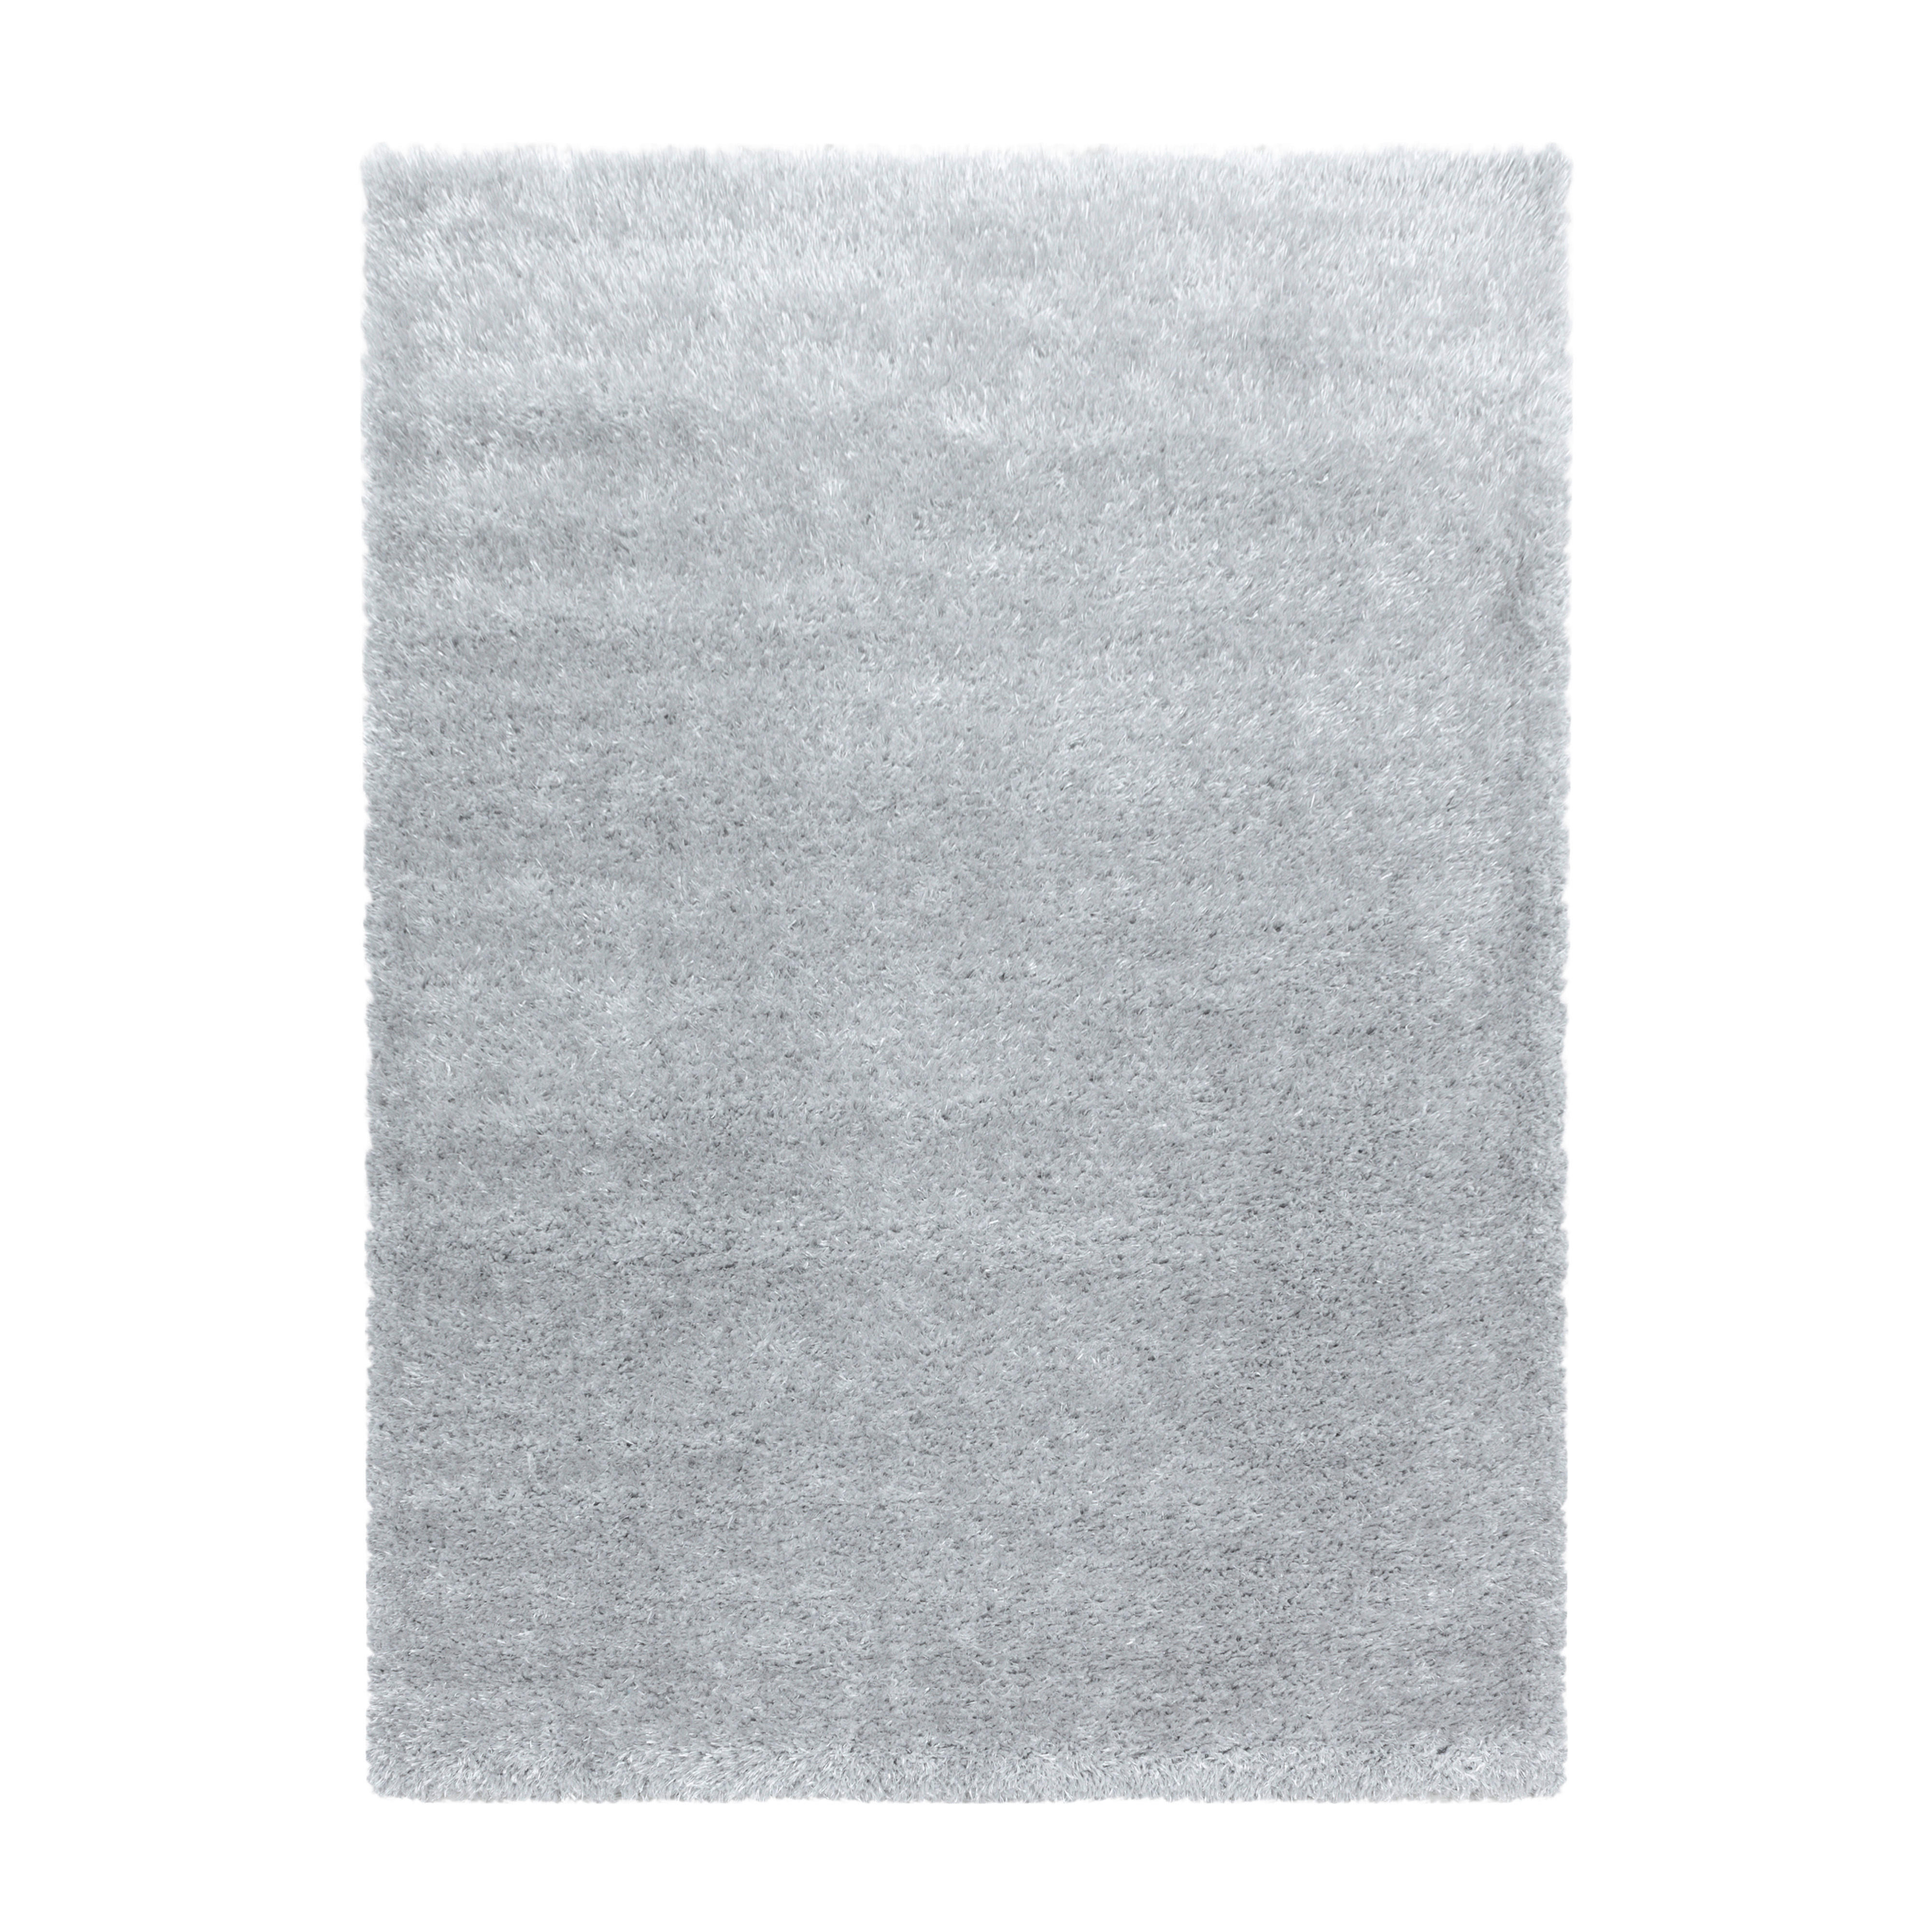 HOCHFLORTEPPICH  60/110 cm  gewebt  Silberfarben   - Silberfarben, Basics, Textil (60/110cm) - Novel